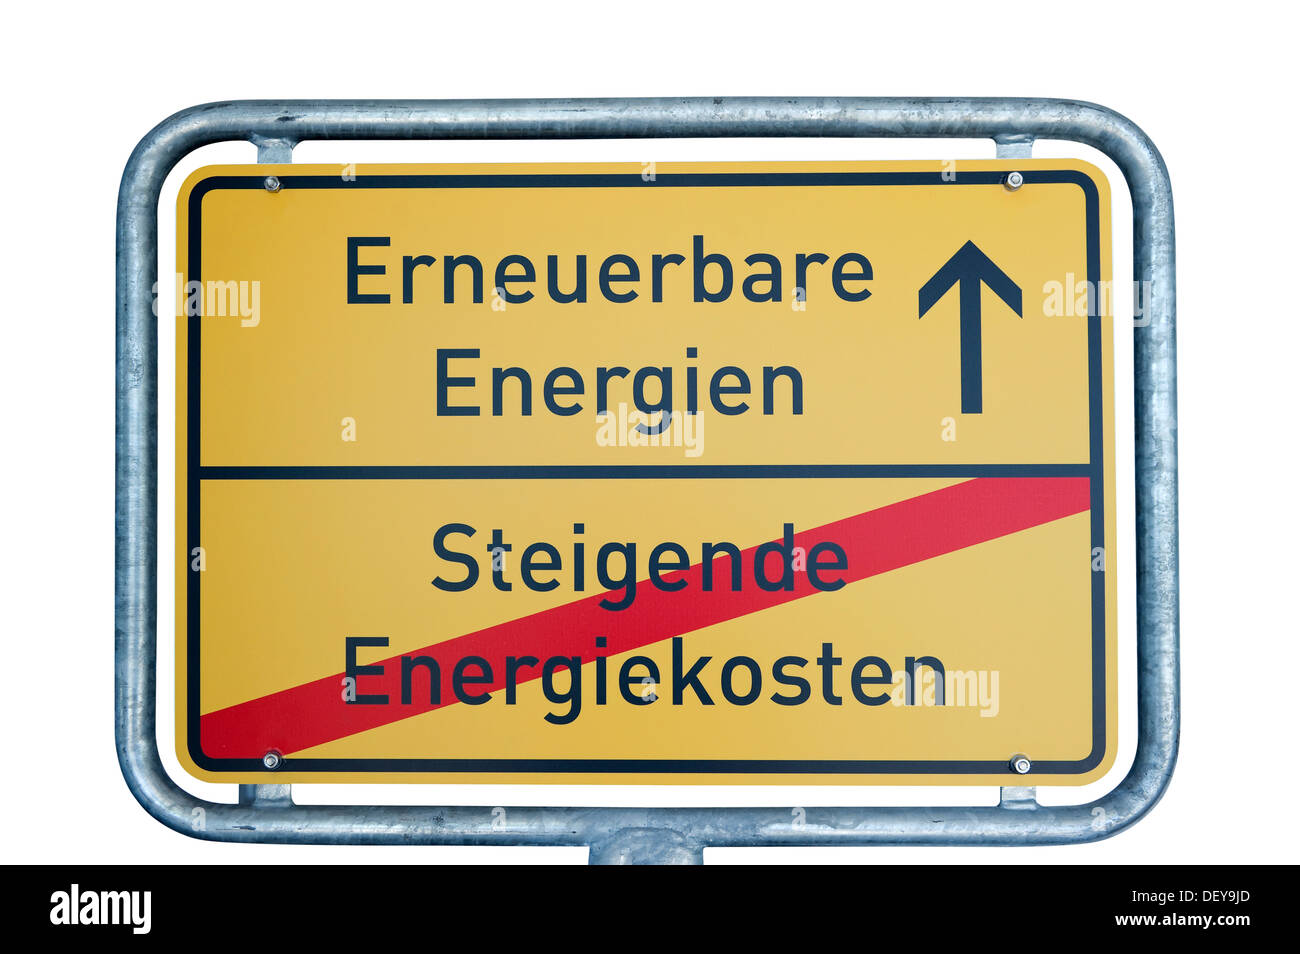 City limit sign, entering Erneuerbare Energien, leaving Steigende Energiekosten, German for starting renewable energy to end Stock Photo